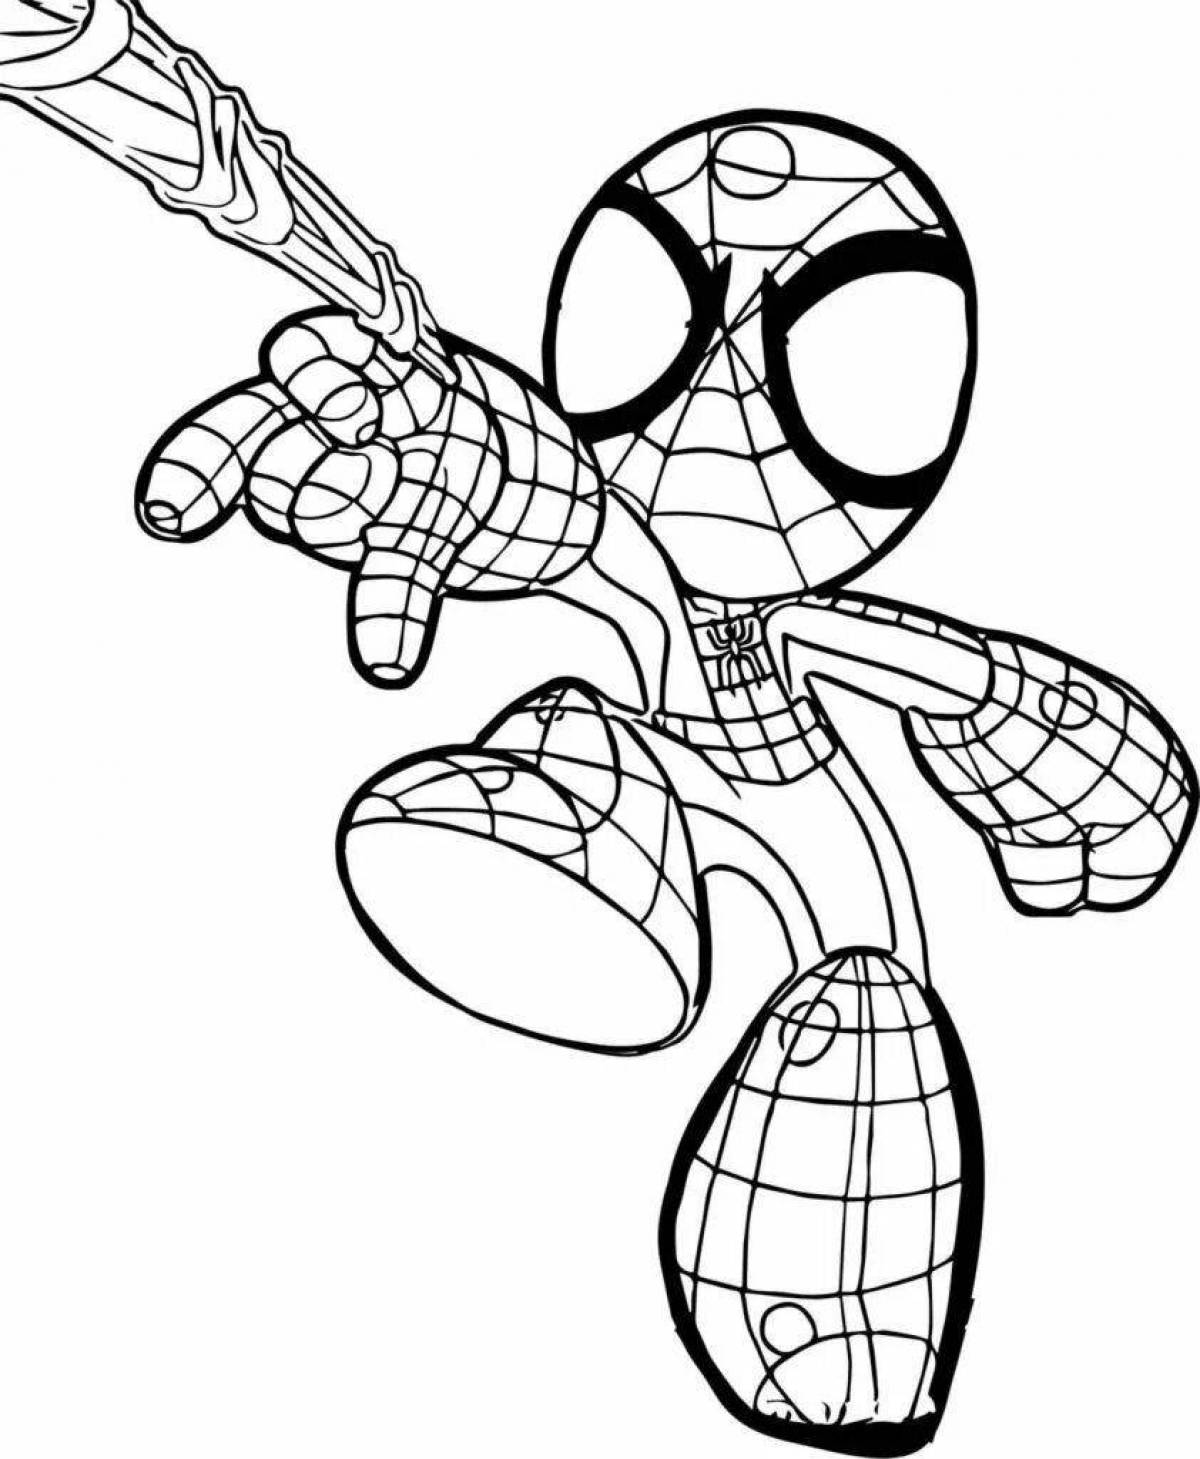 Coloring book brave spiderman robot